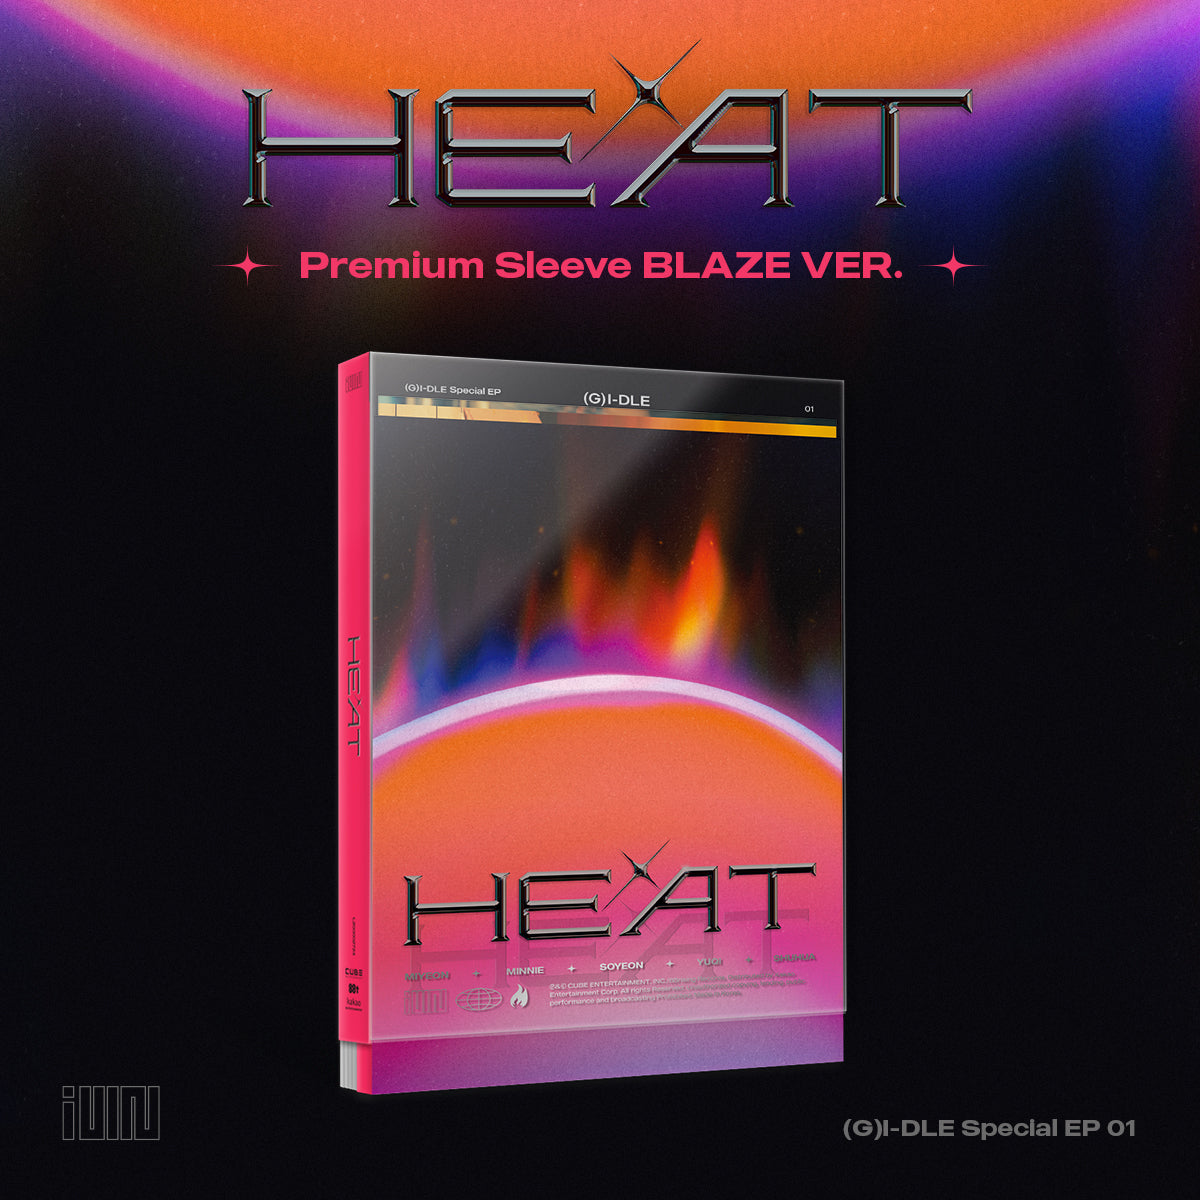 (G)I-DLE SPECIAL ALBUM 'HEAT' BLAZE VERSION COVER